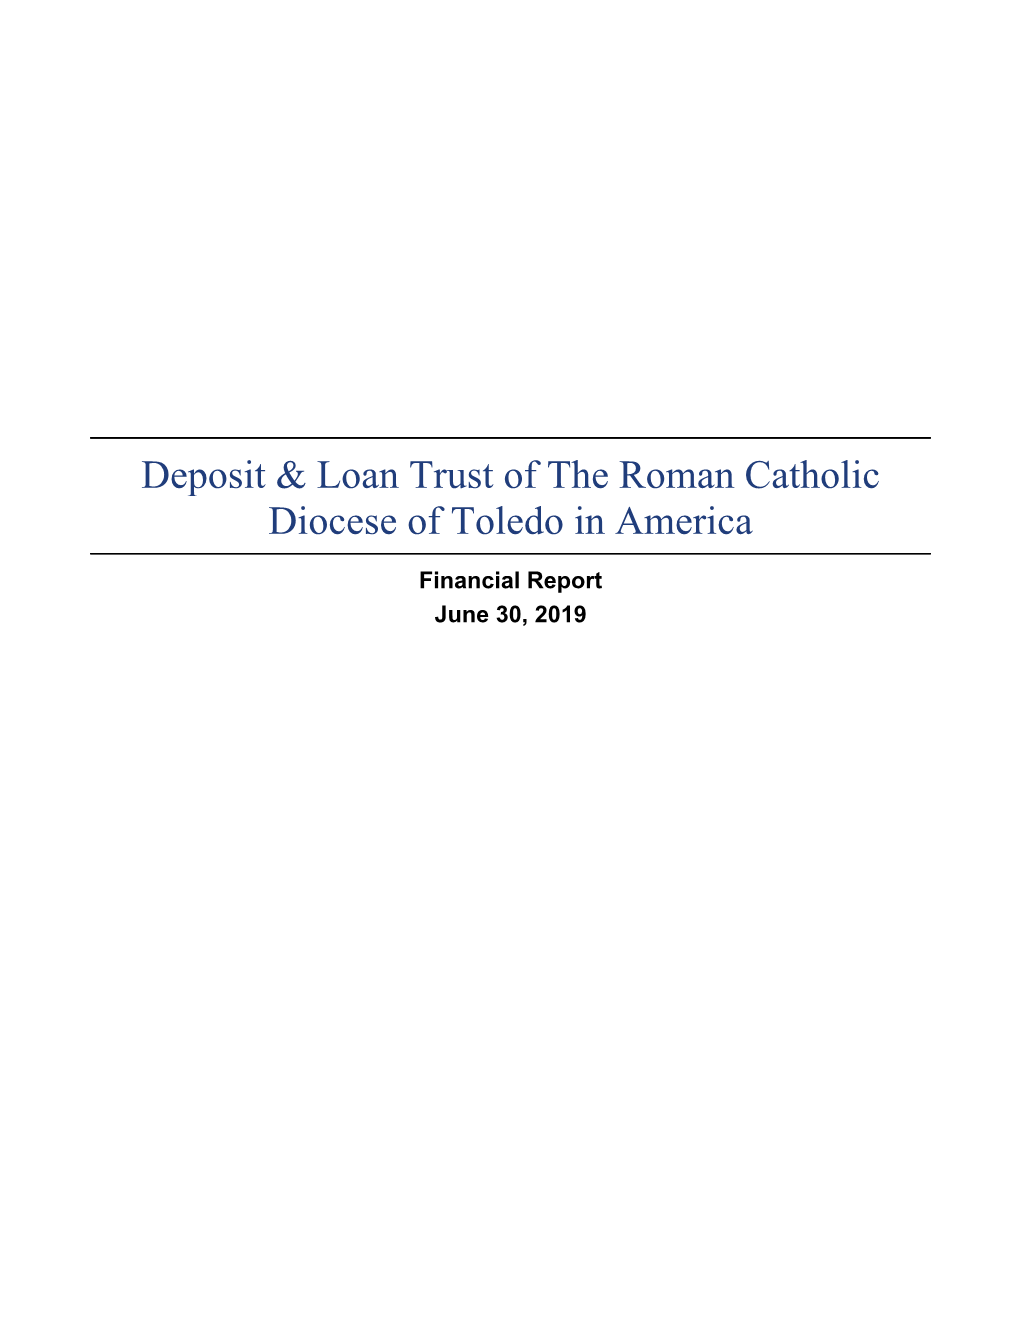 Deposit & Loan Trust of the Roman Catholic Diocese of Toledo In